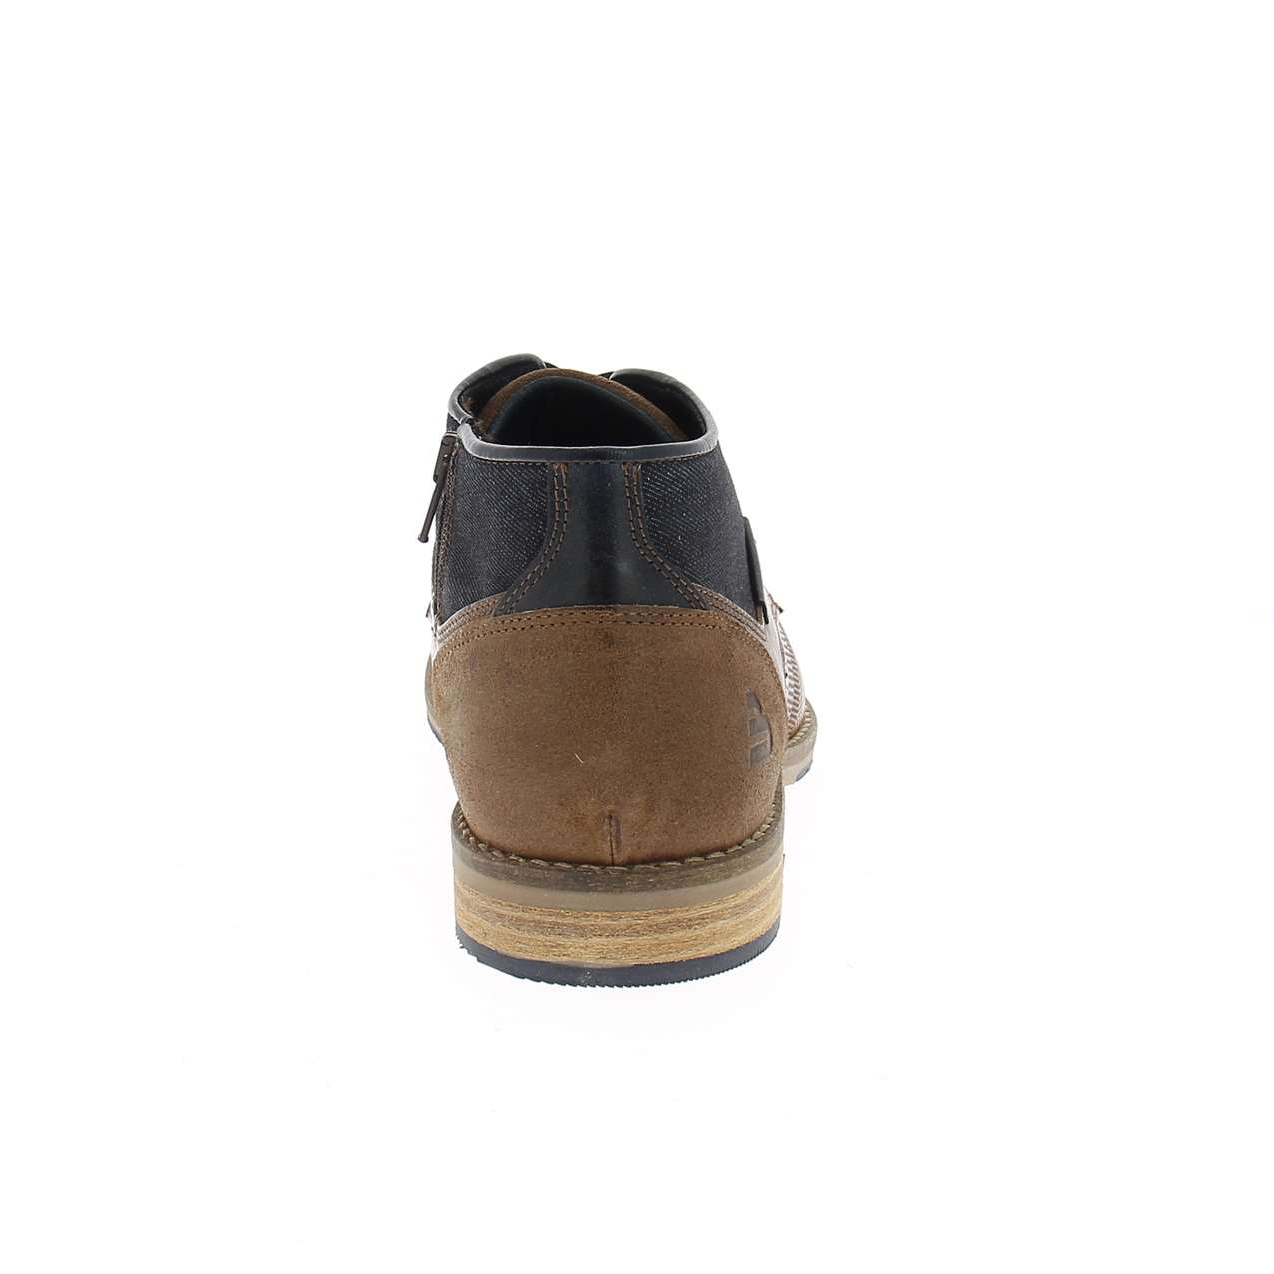 04 - BUGRA - BULLBOXER - Chaussures à lacets - Cuir